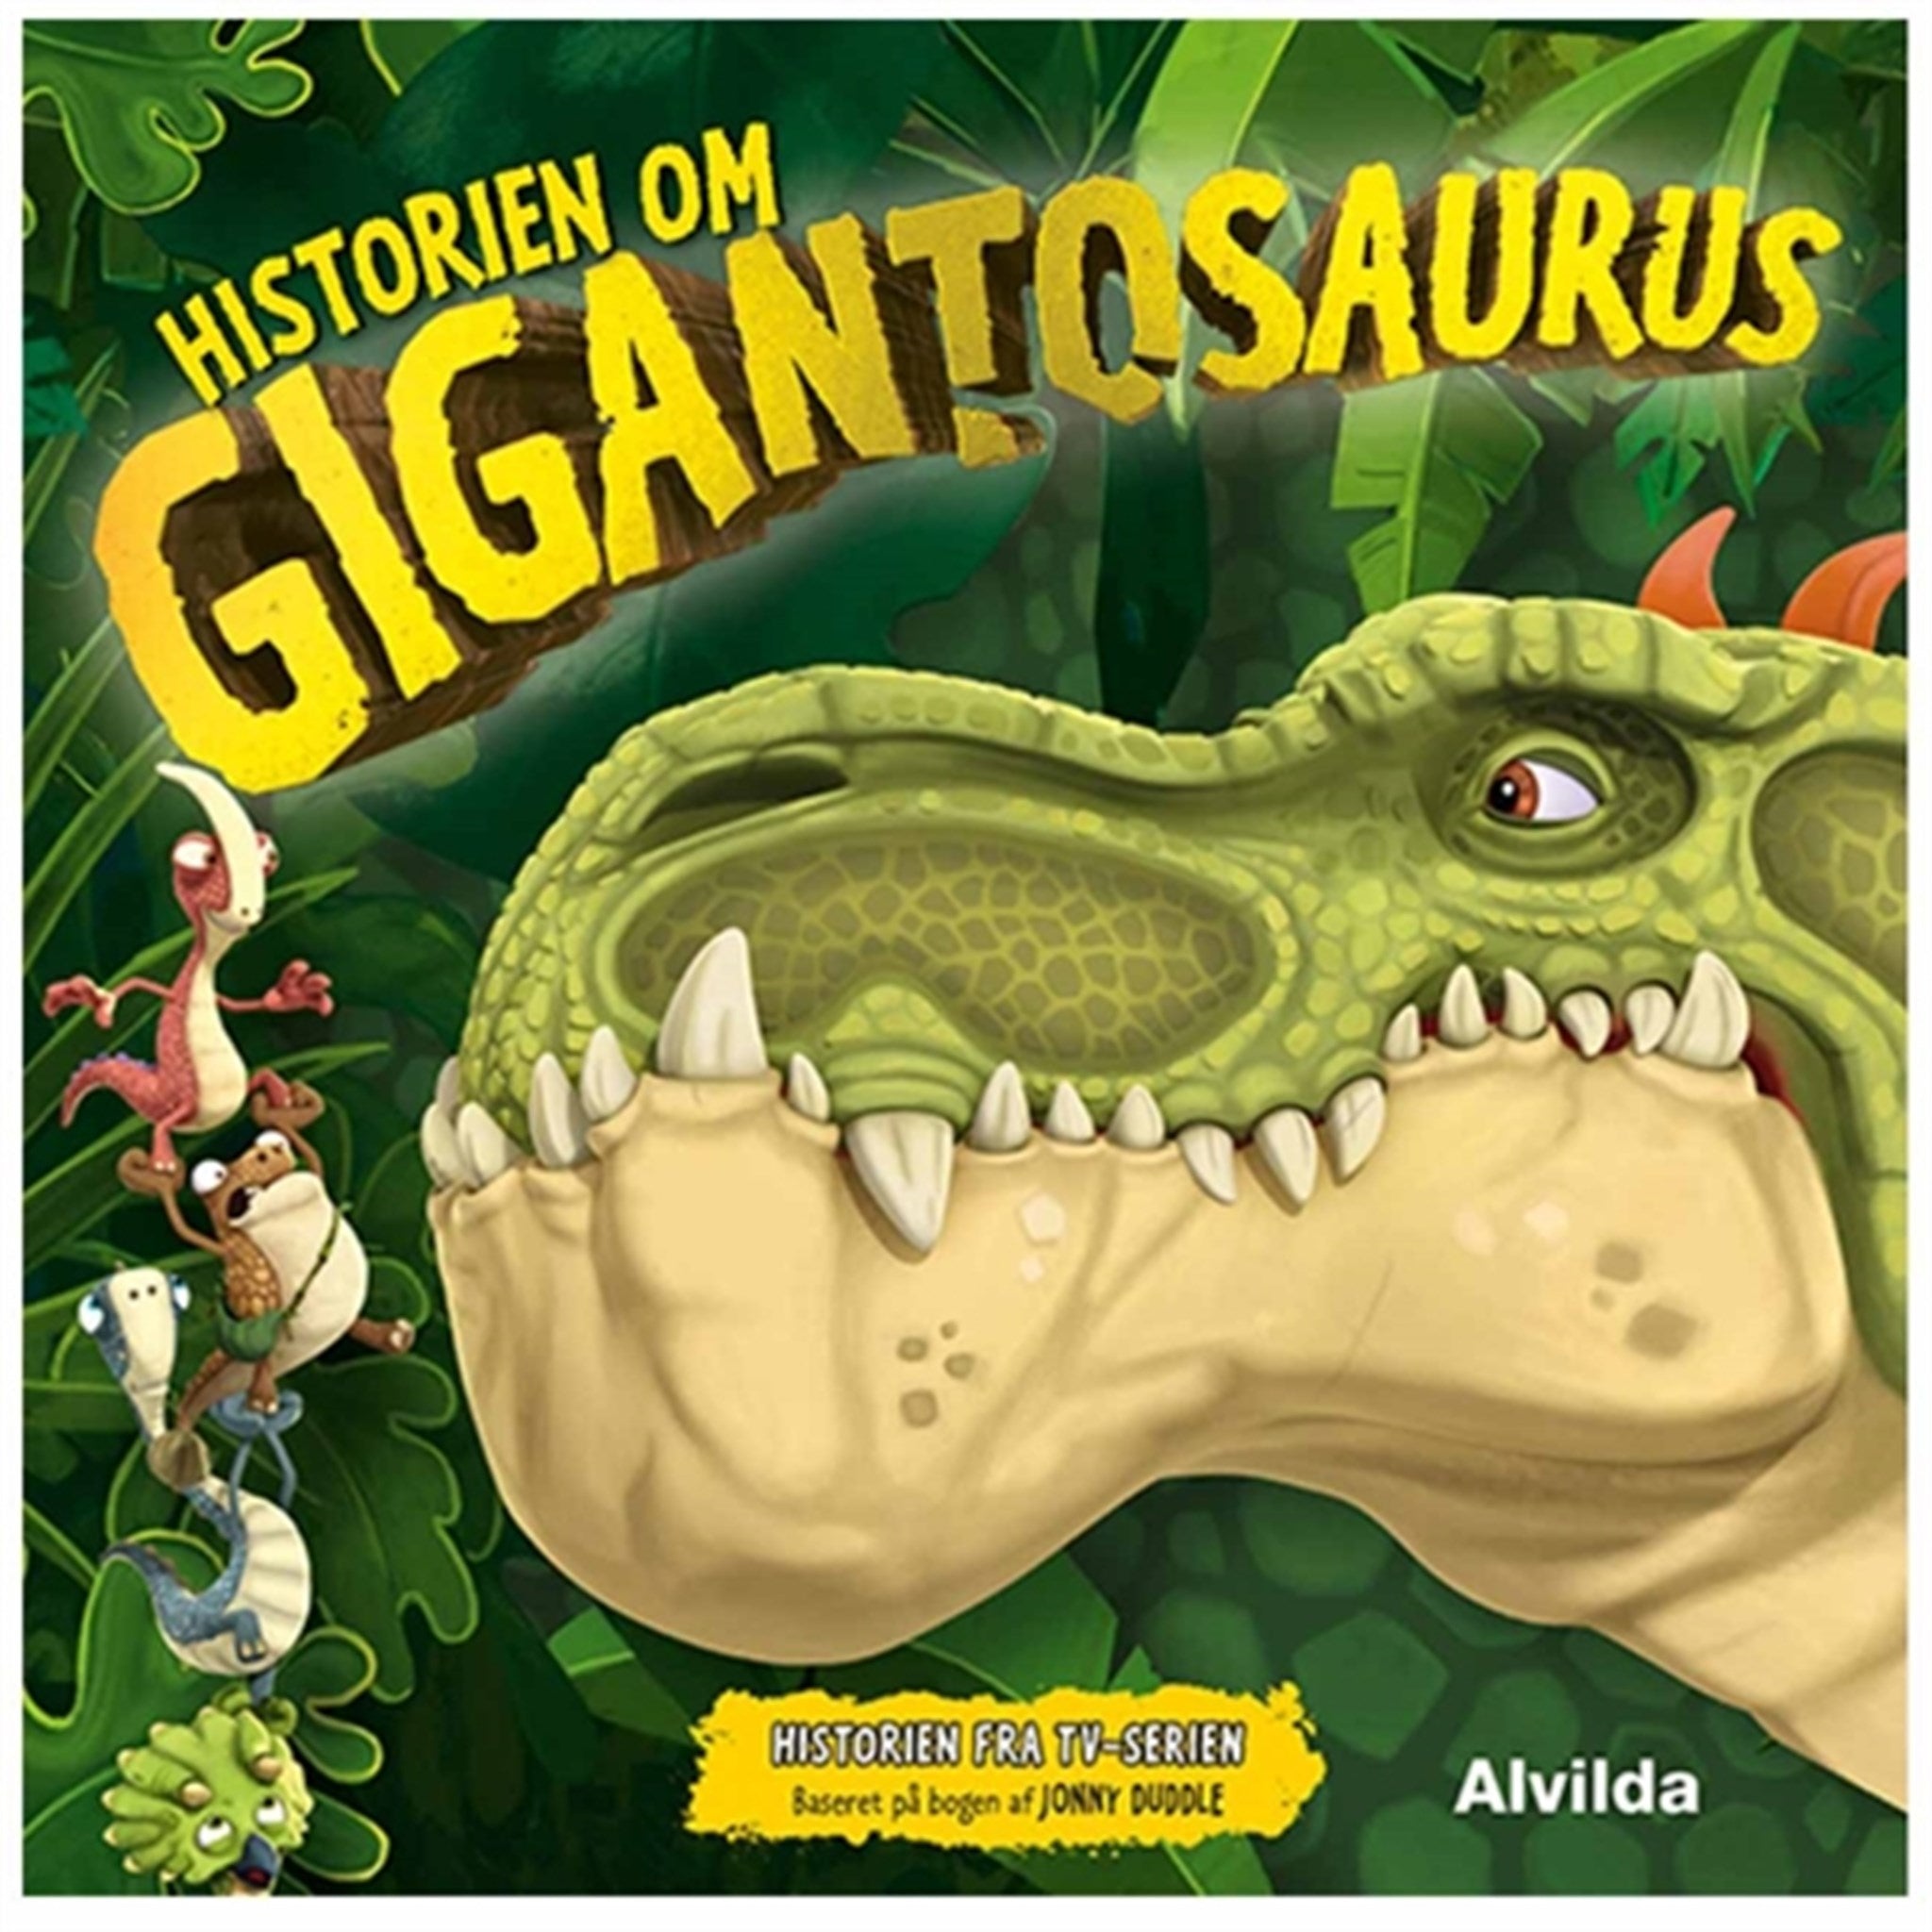 Alvilda Gigantosaurus - Historien om Gigantosaurus